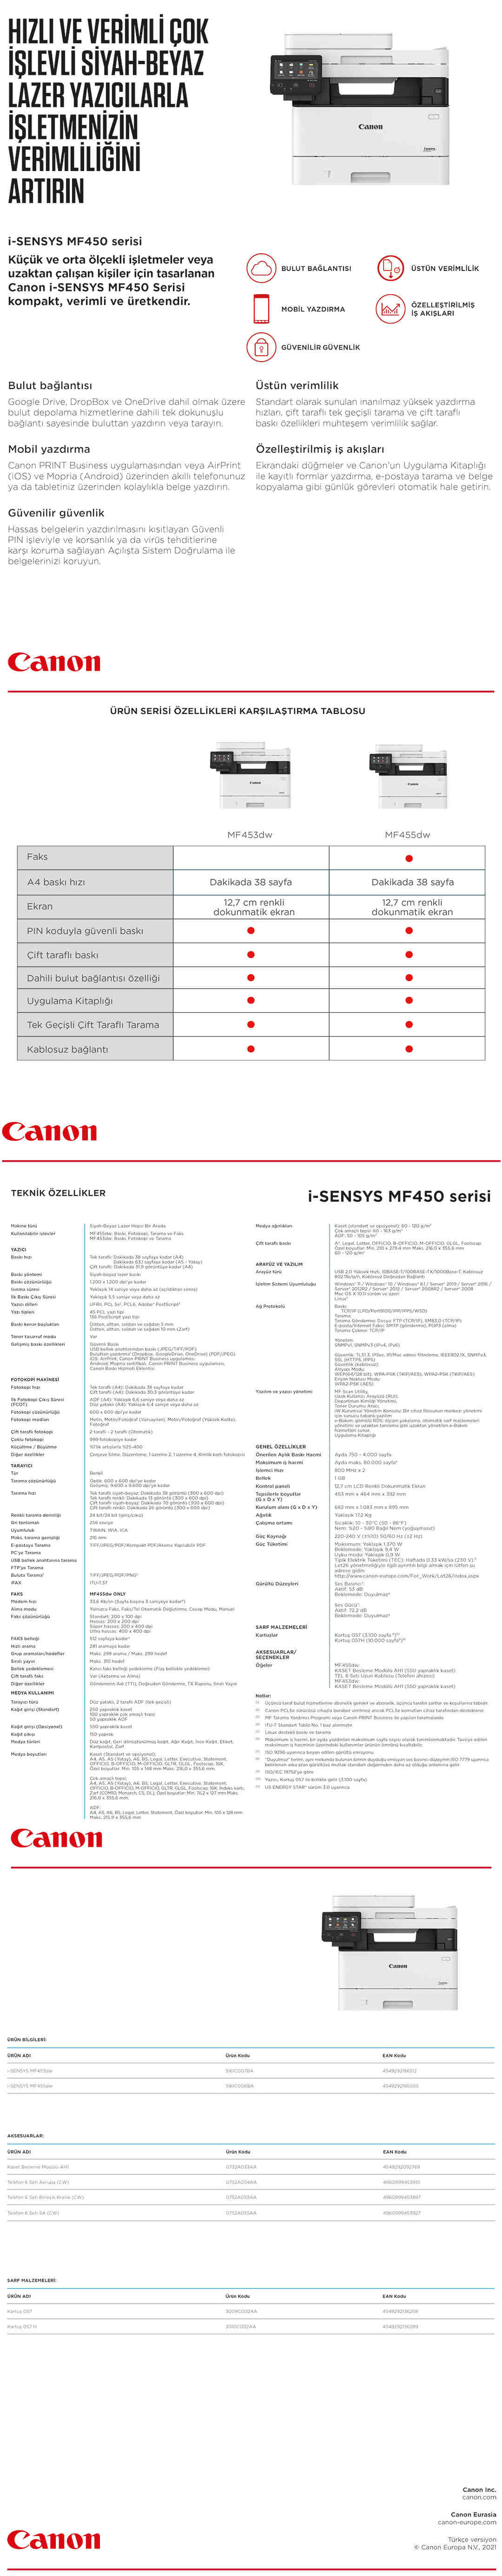 CanonMF455DWbrosur.jpg (1.14 MB)